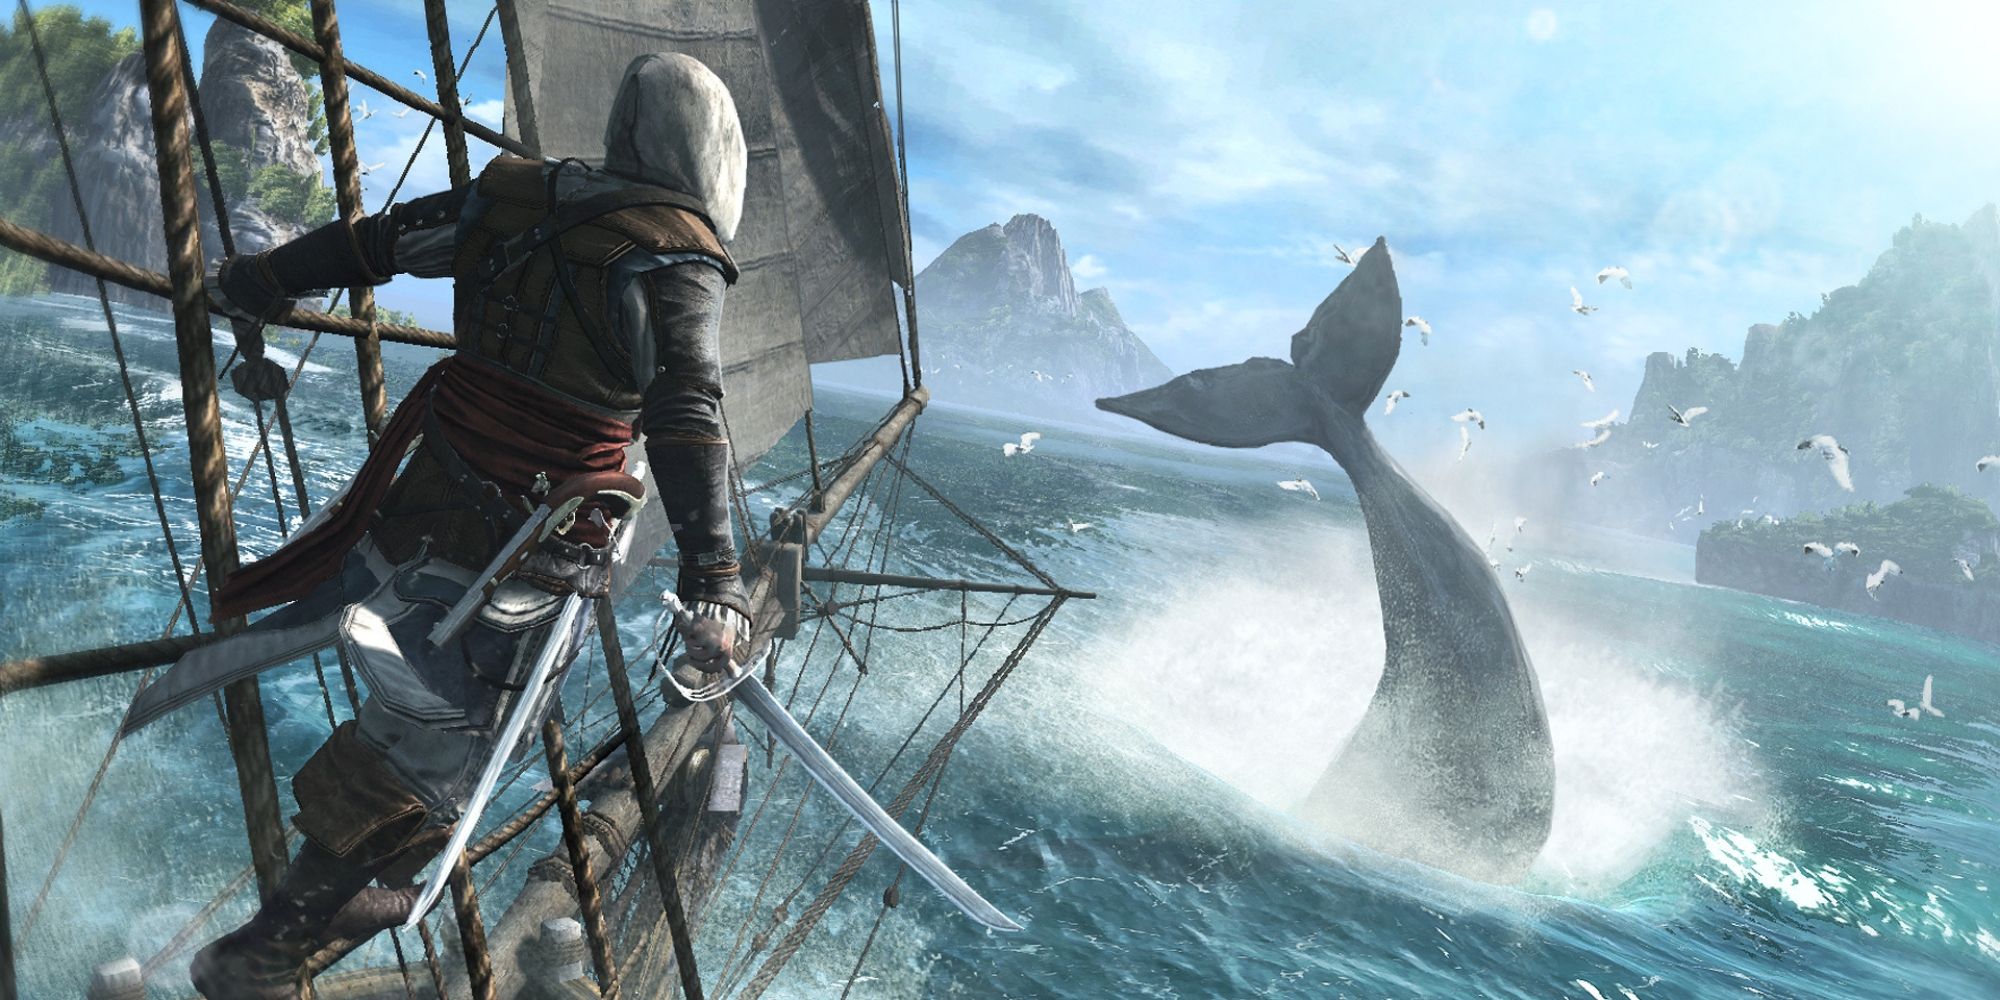 Edward in Assassin's Creed IV Black Flag